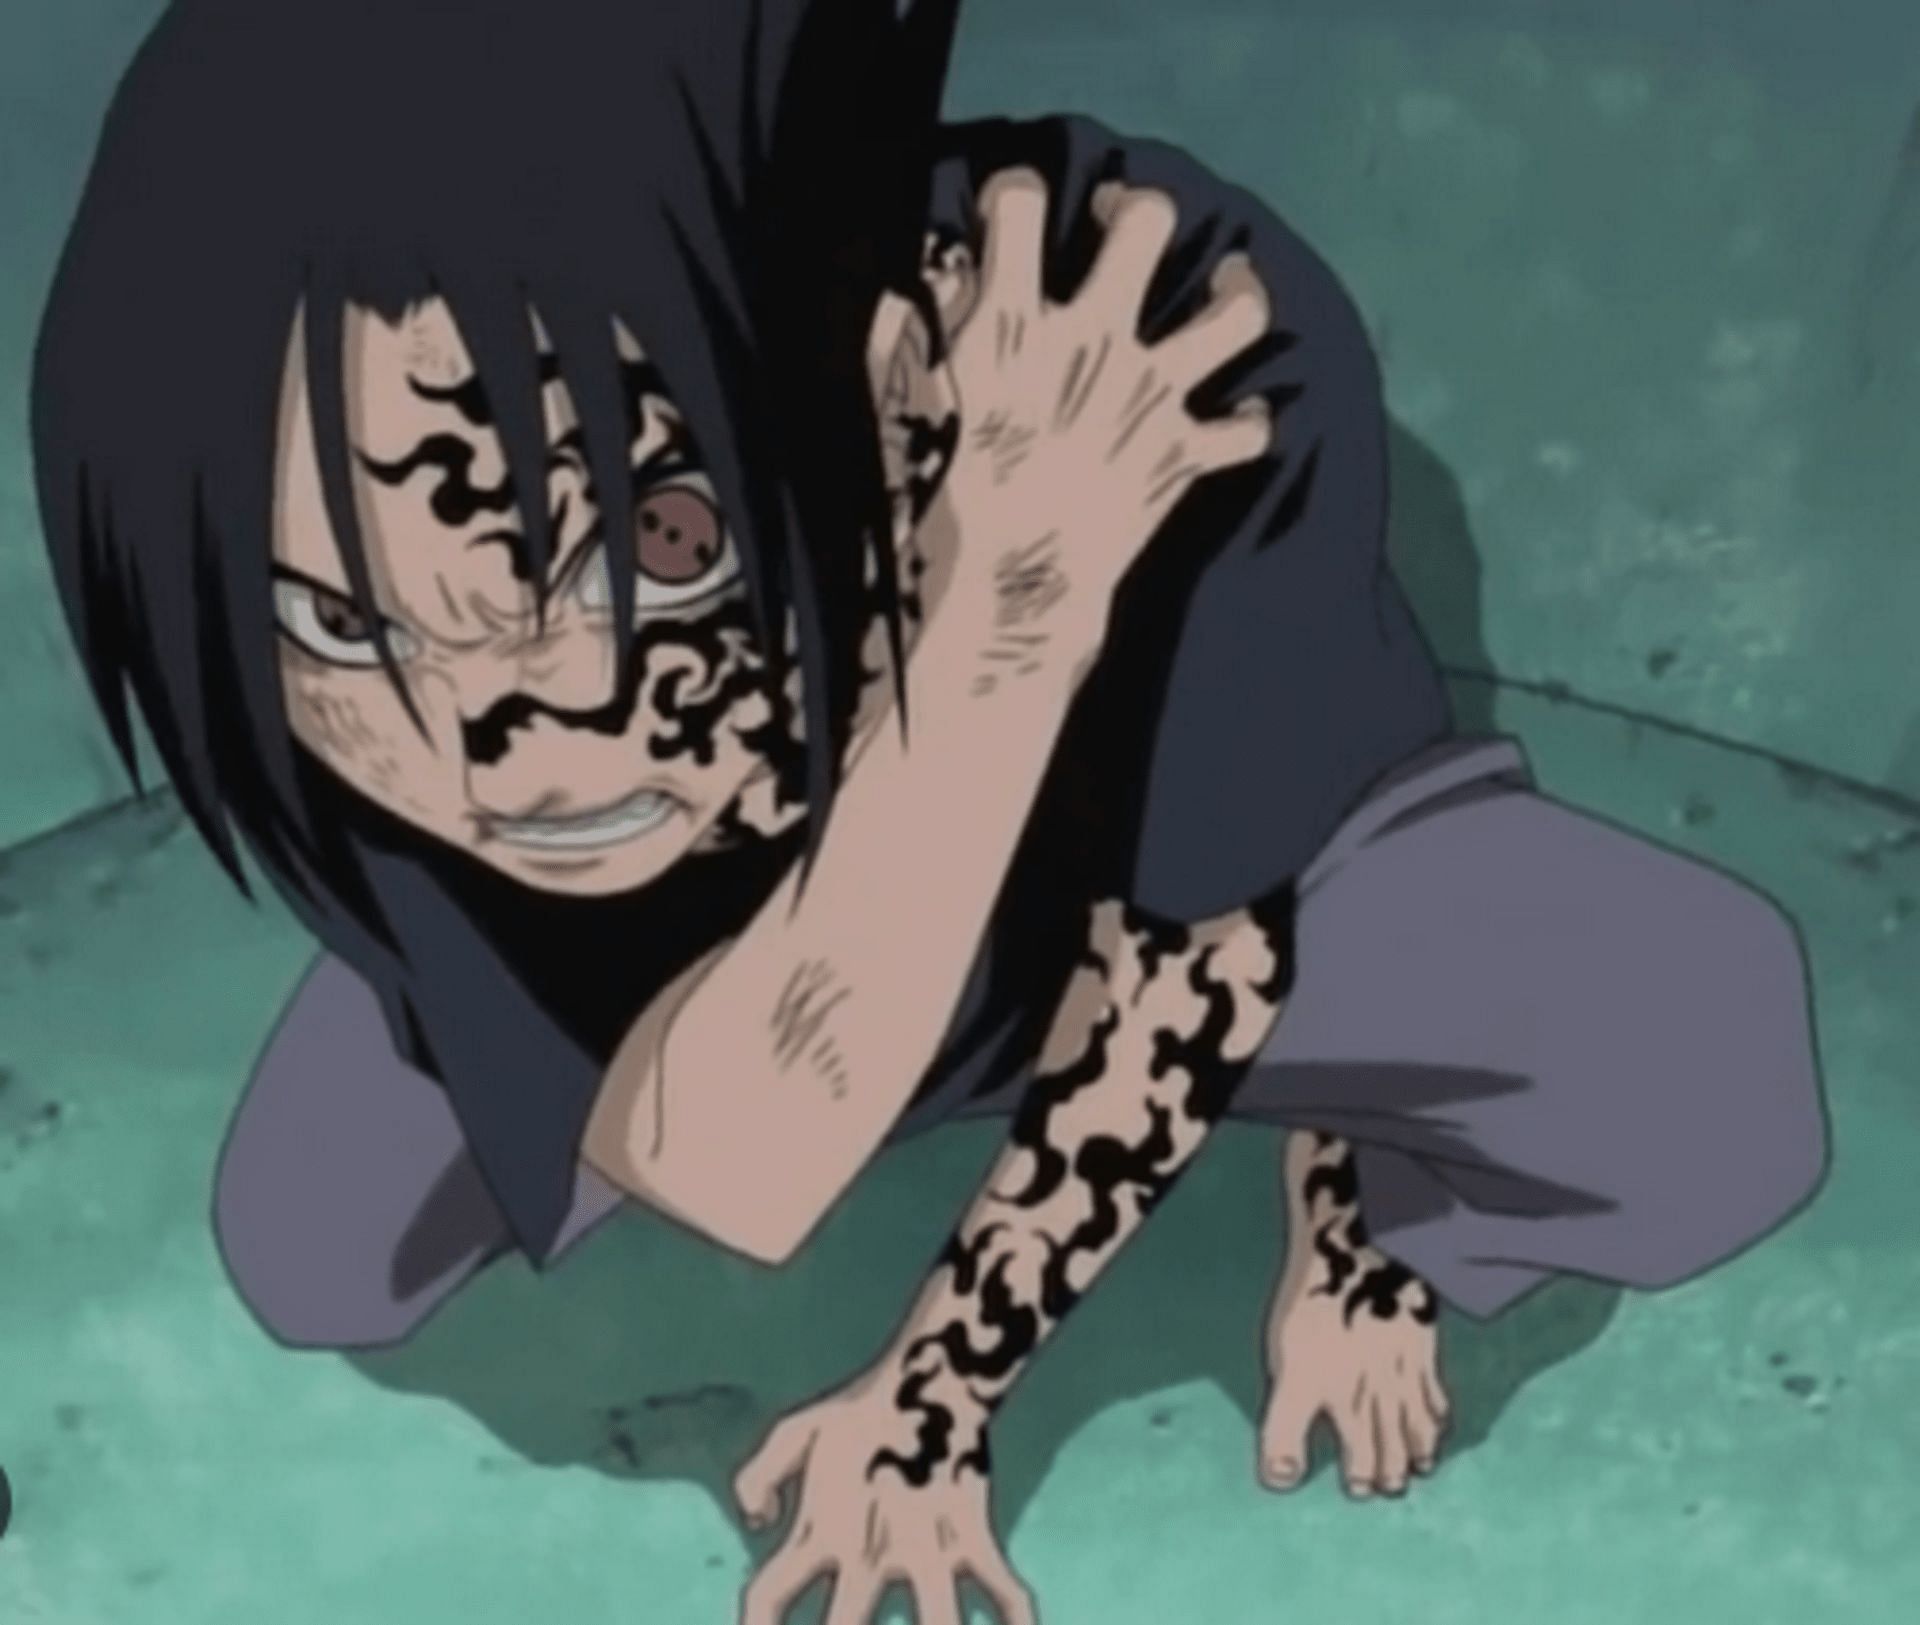 Sasuke Uchiha (curse mark manifesting) in Naruto (Image via Pierrot)